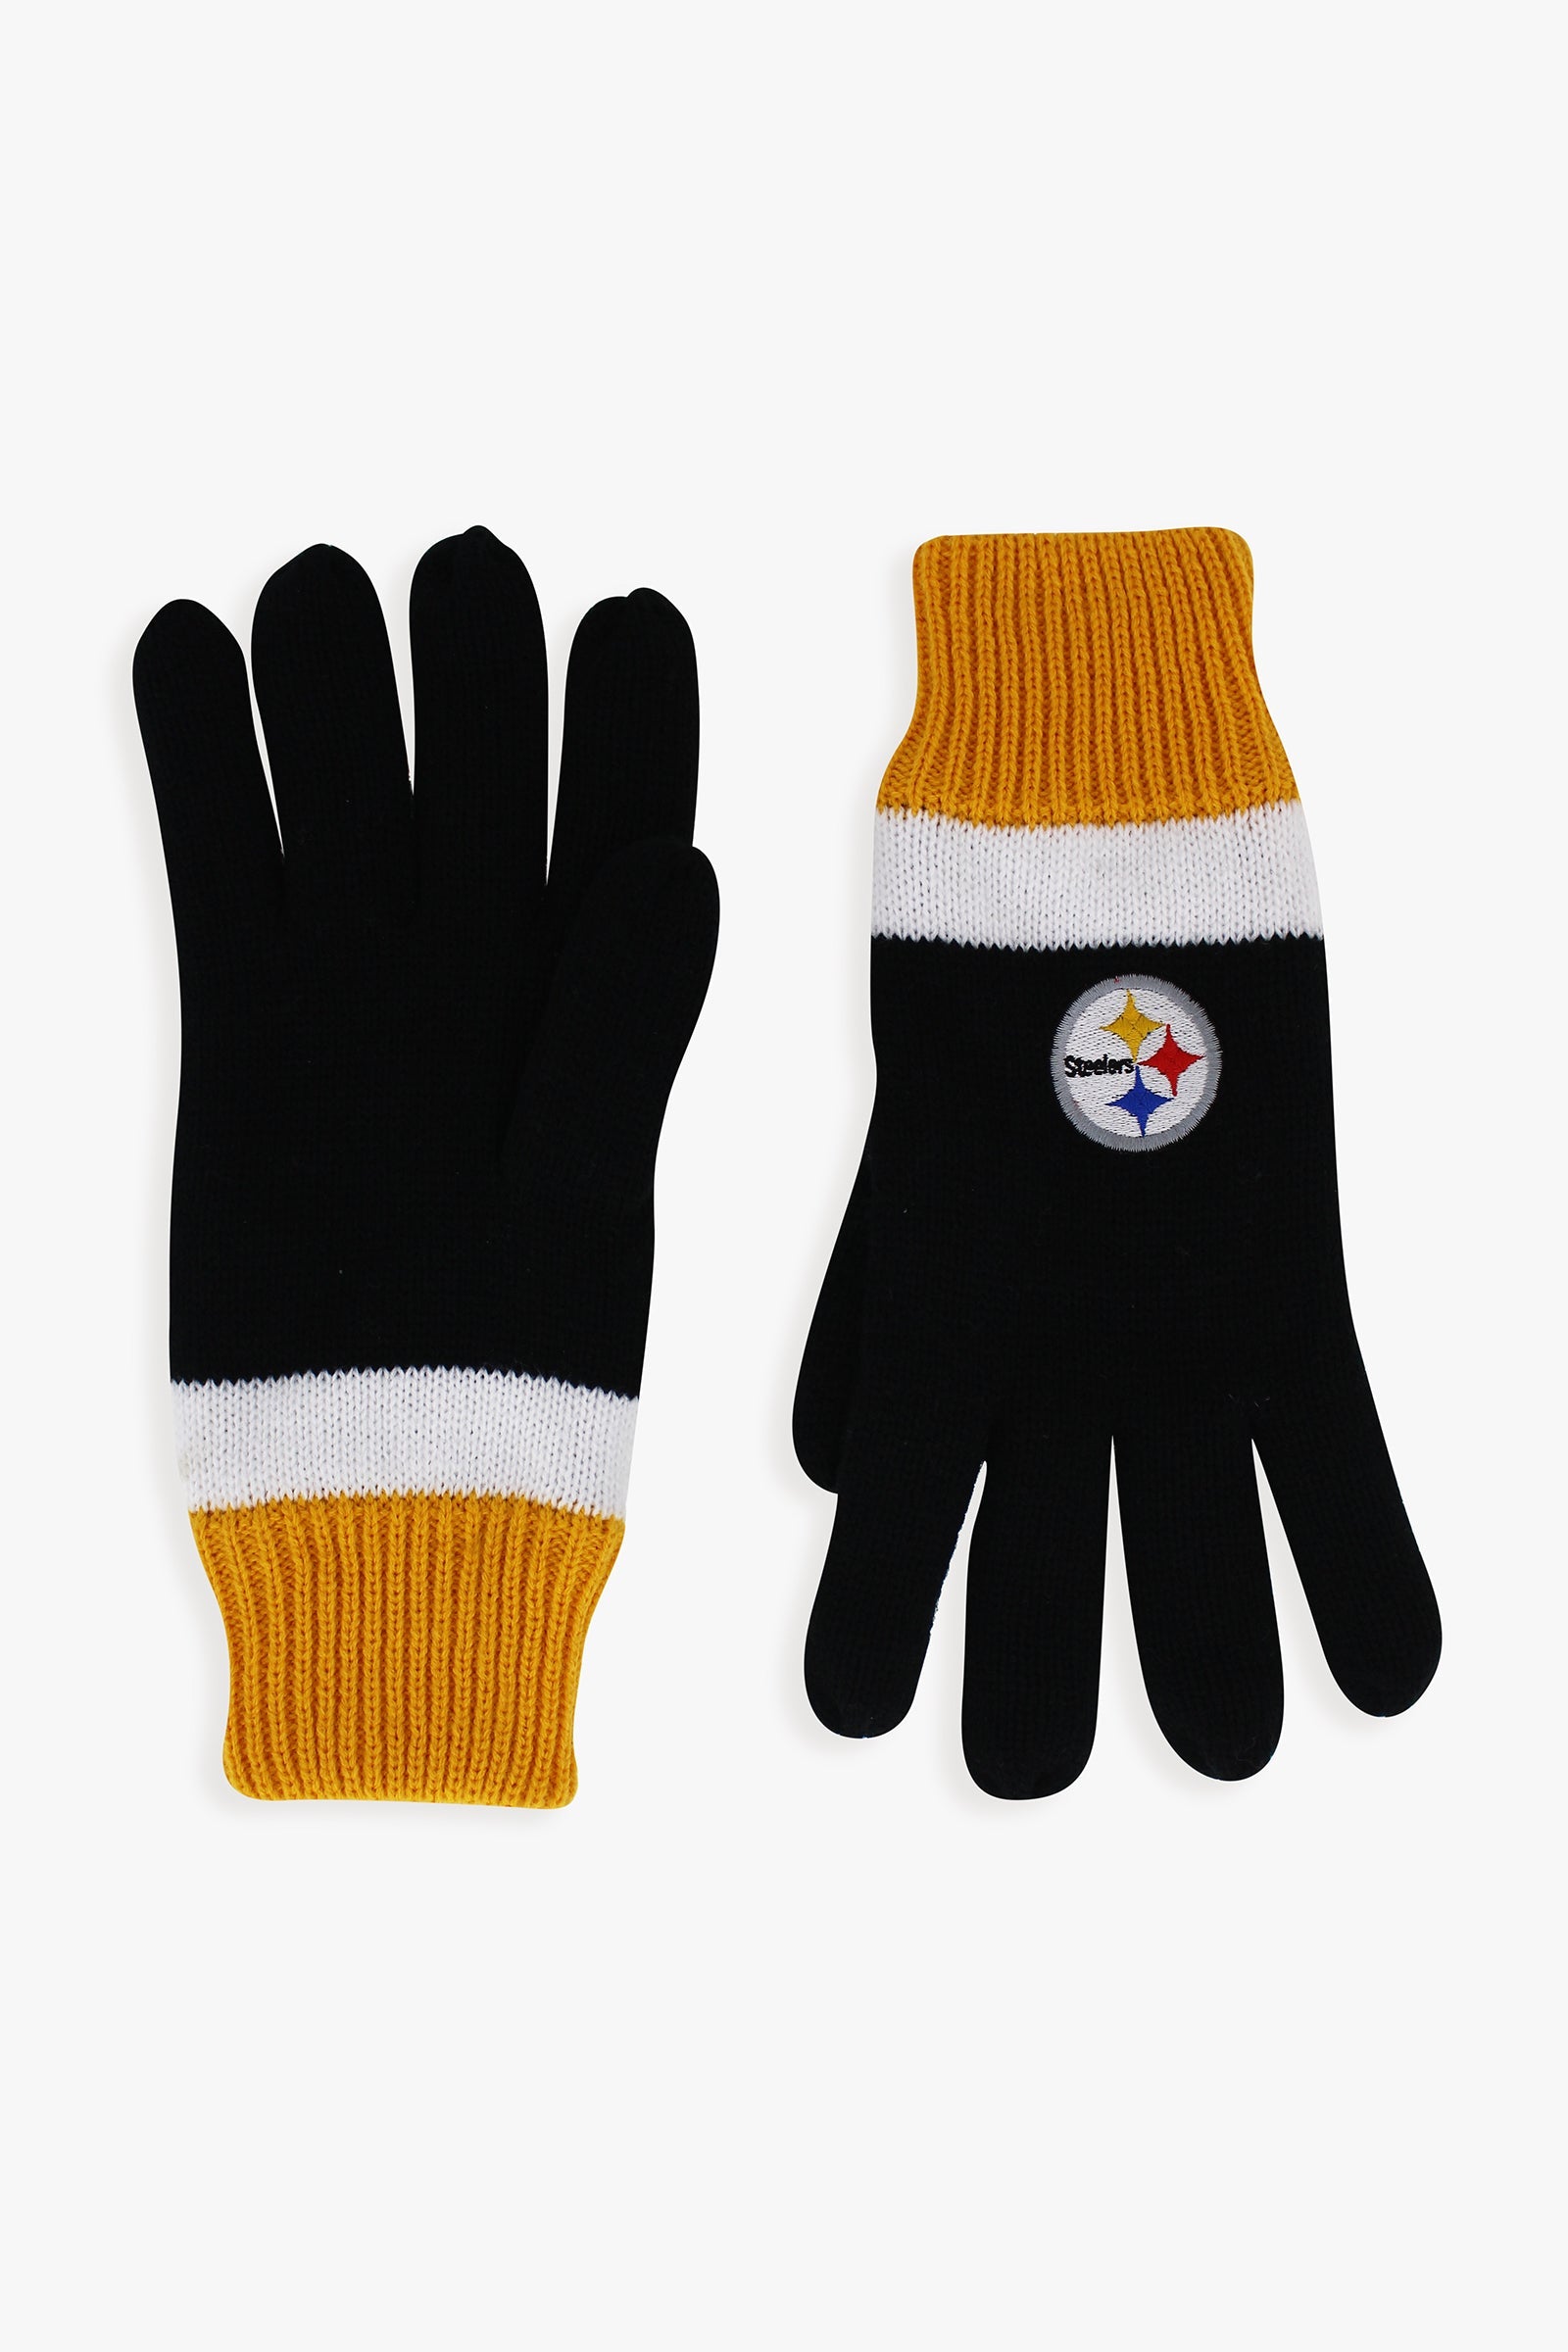 NFL Men's Lined Winter Cold Weather Gloves